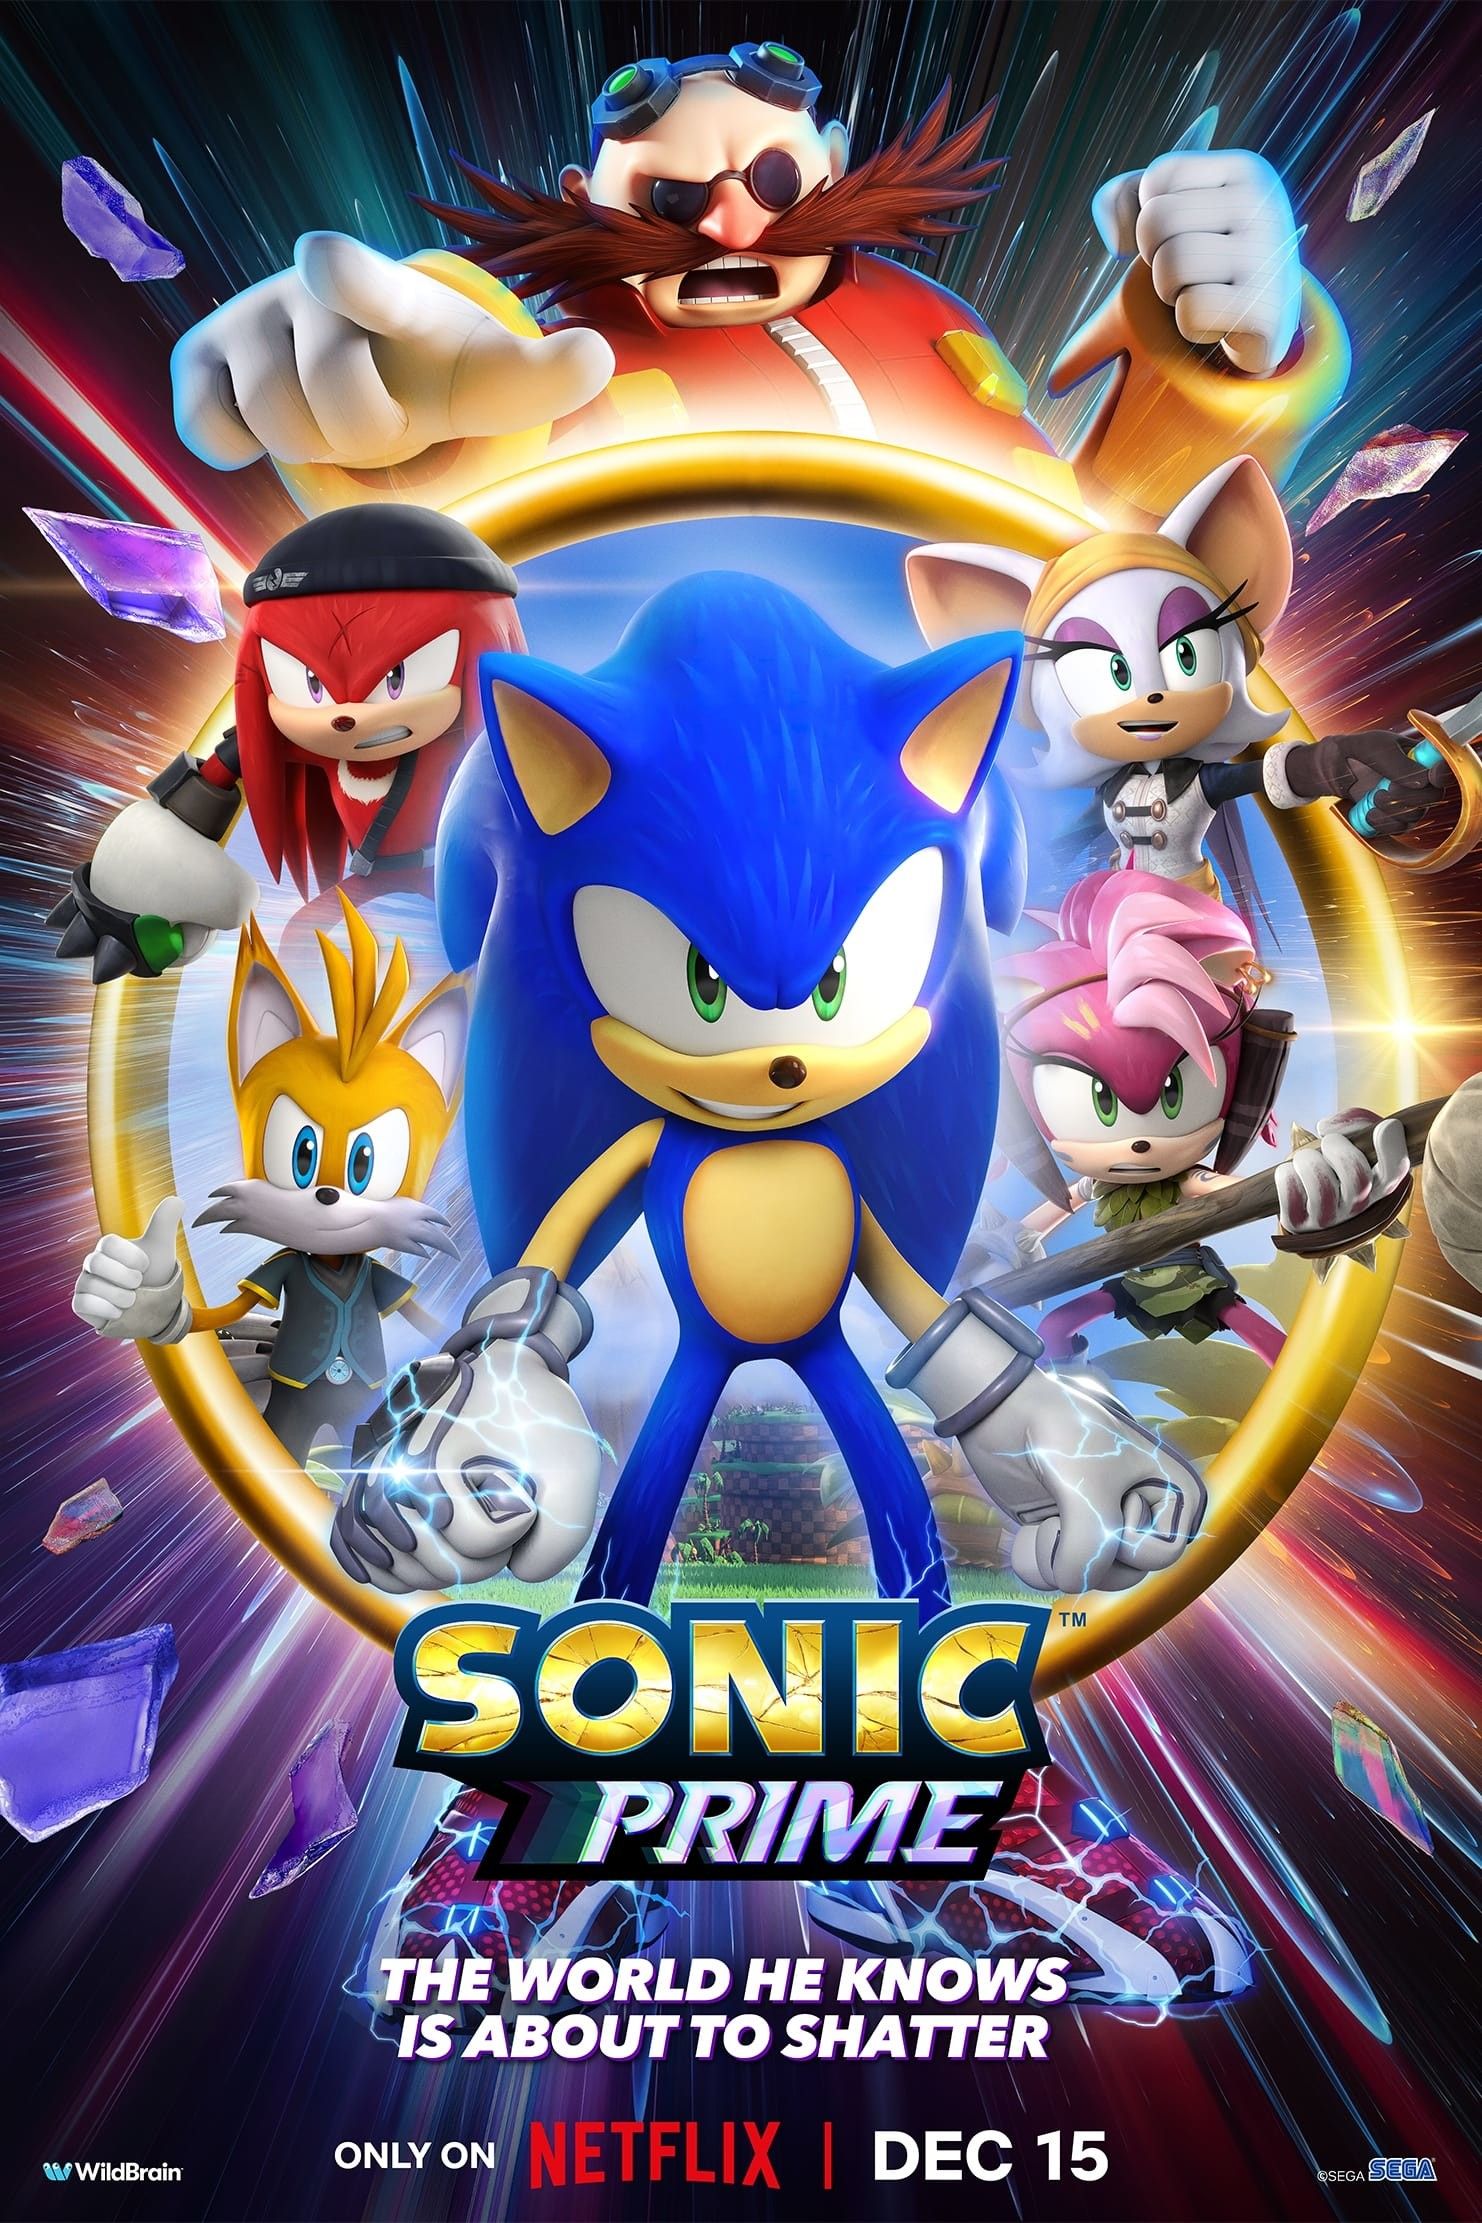 Sonic Boom™ - TV Series Trailer 